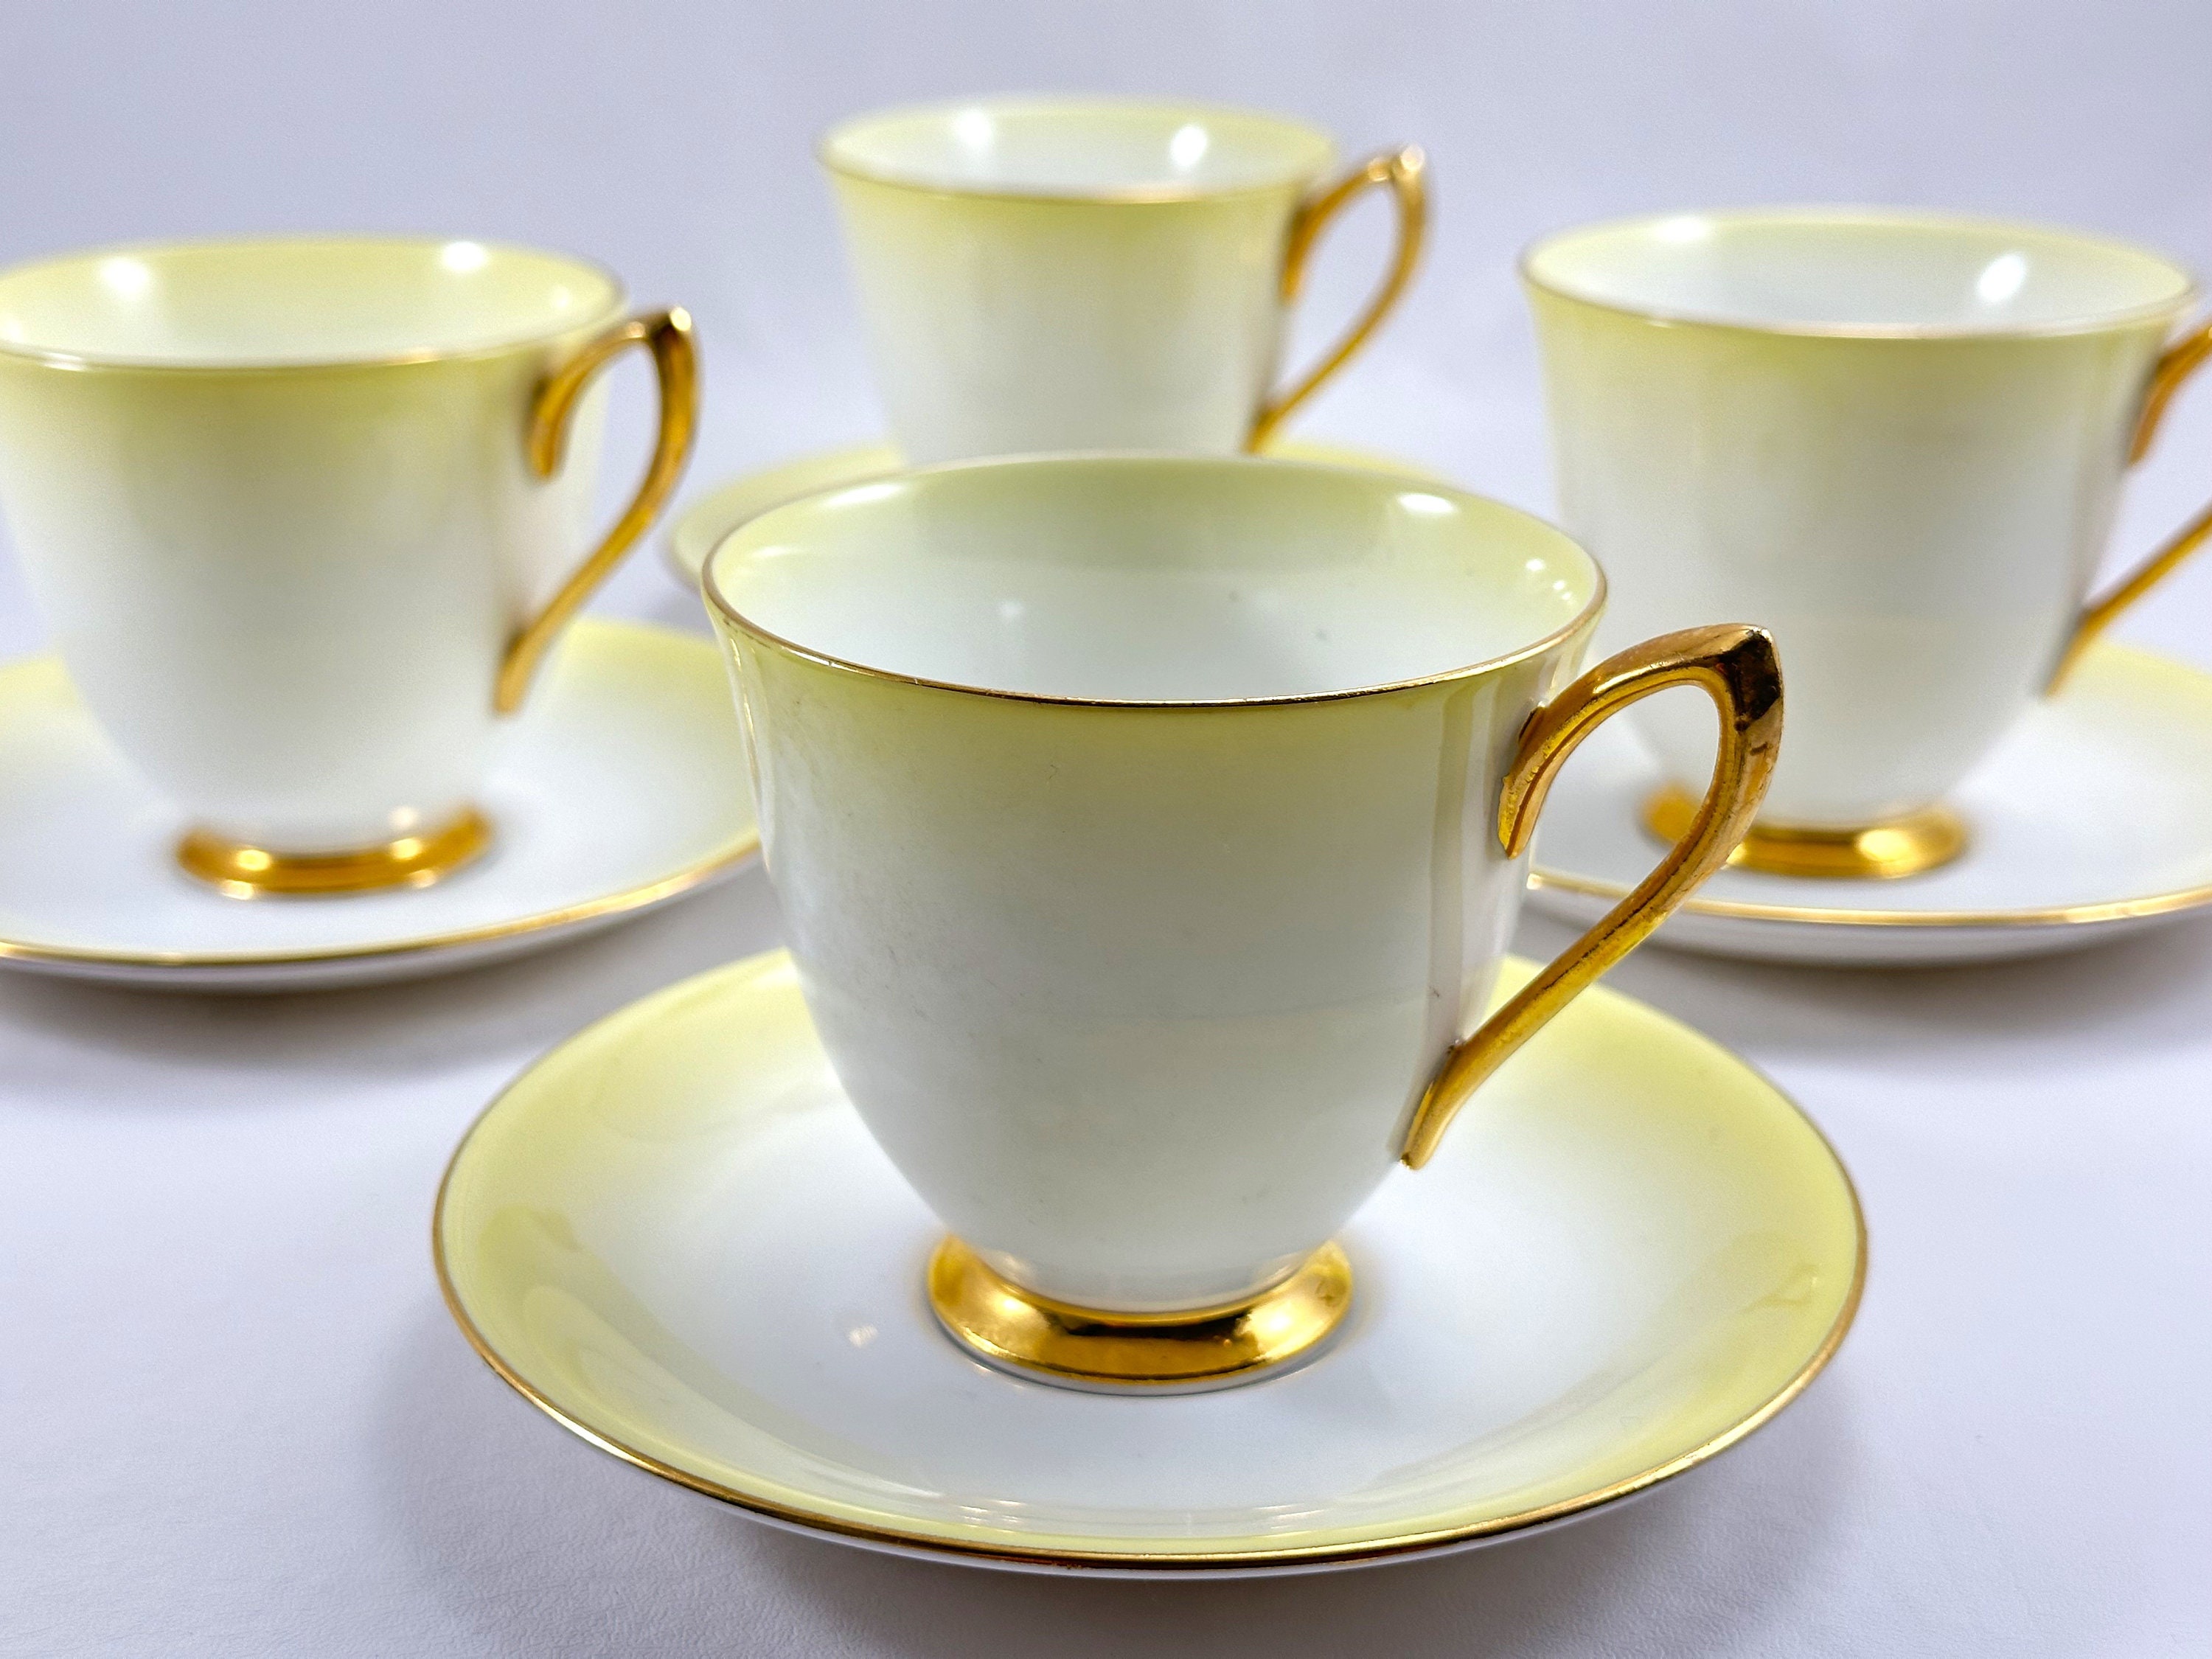 Set 4 Espresso Cup & Saucer Lemon, Cups and mugs